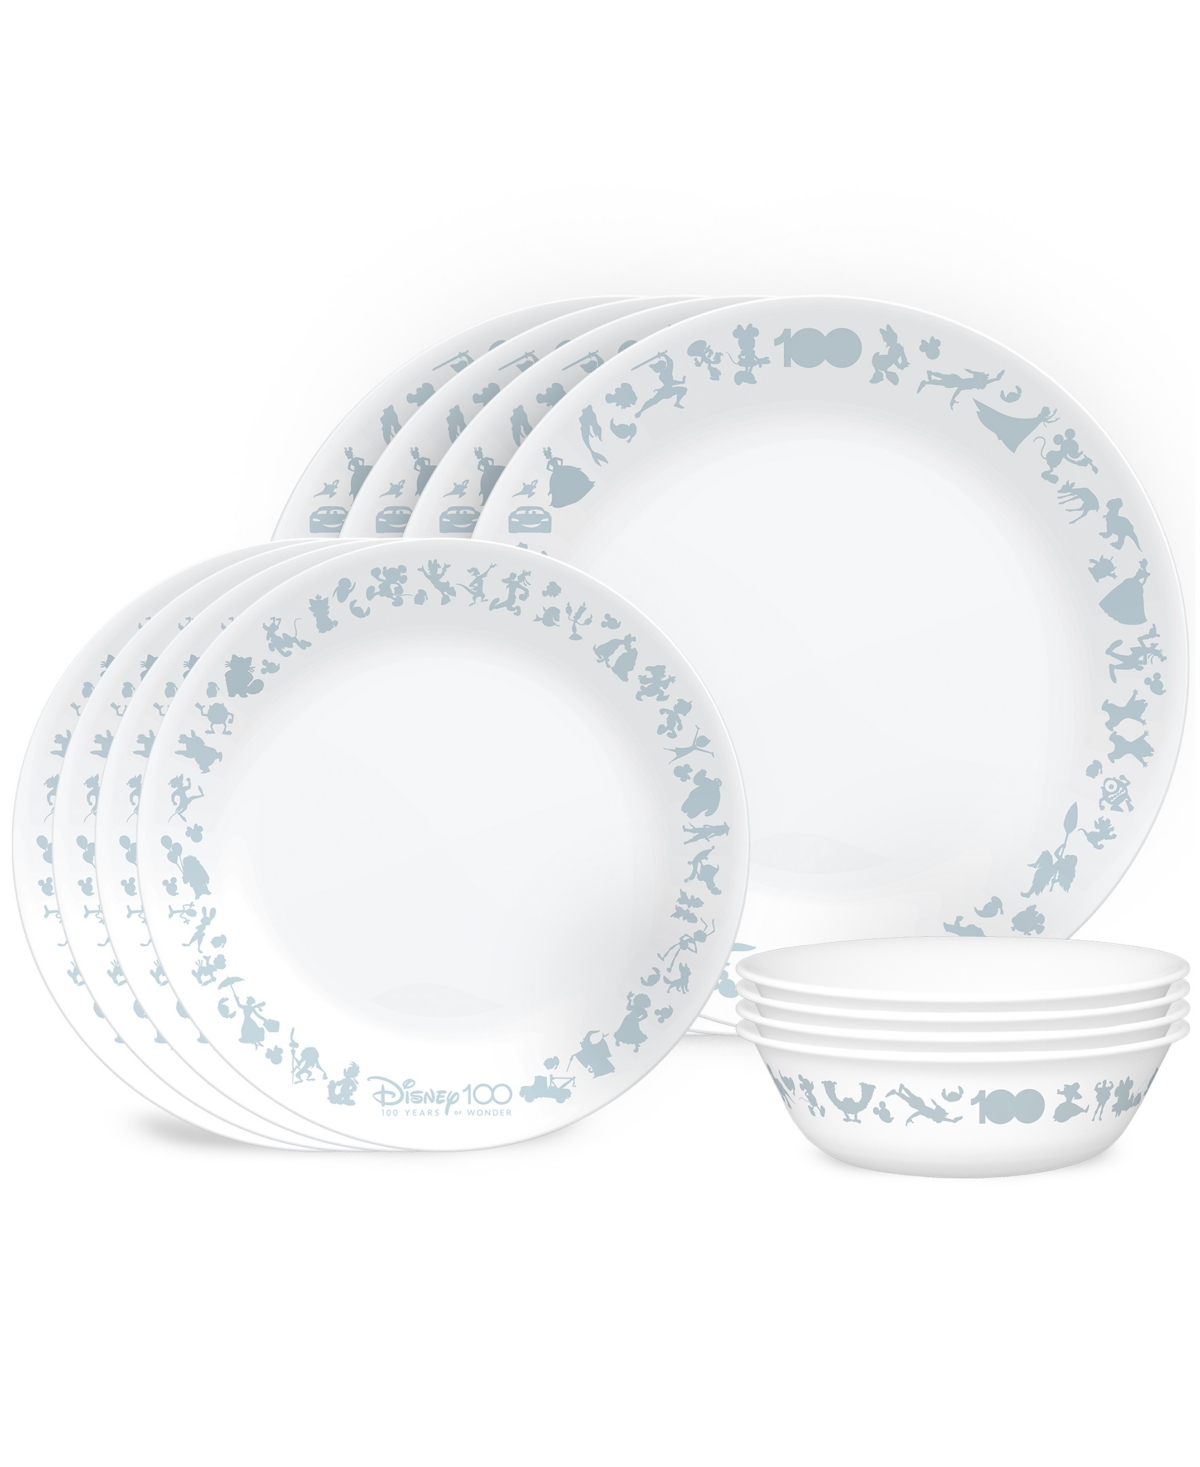 Disney Commemorative Series 12 pc Dinnerware Set, Service for 4 - White